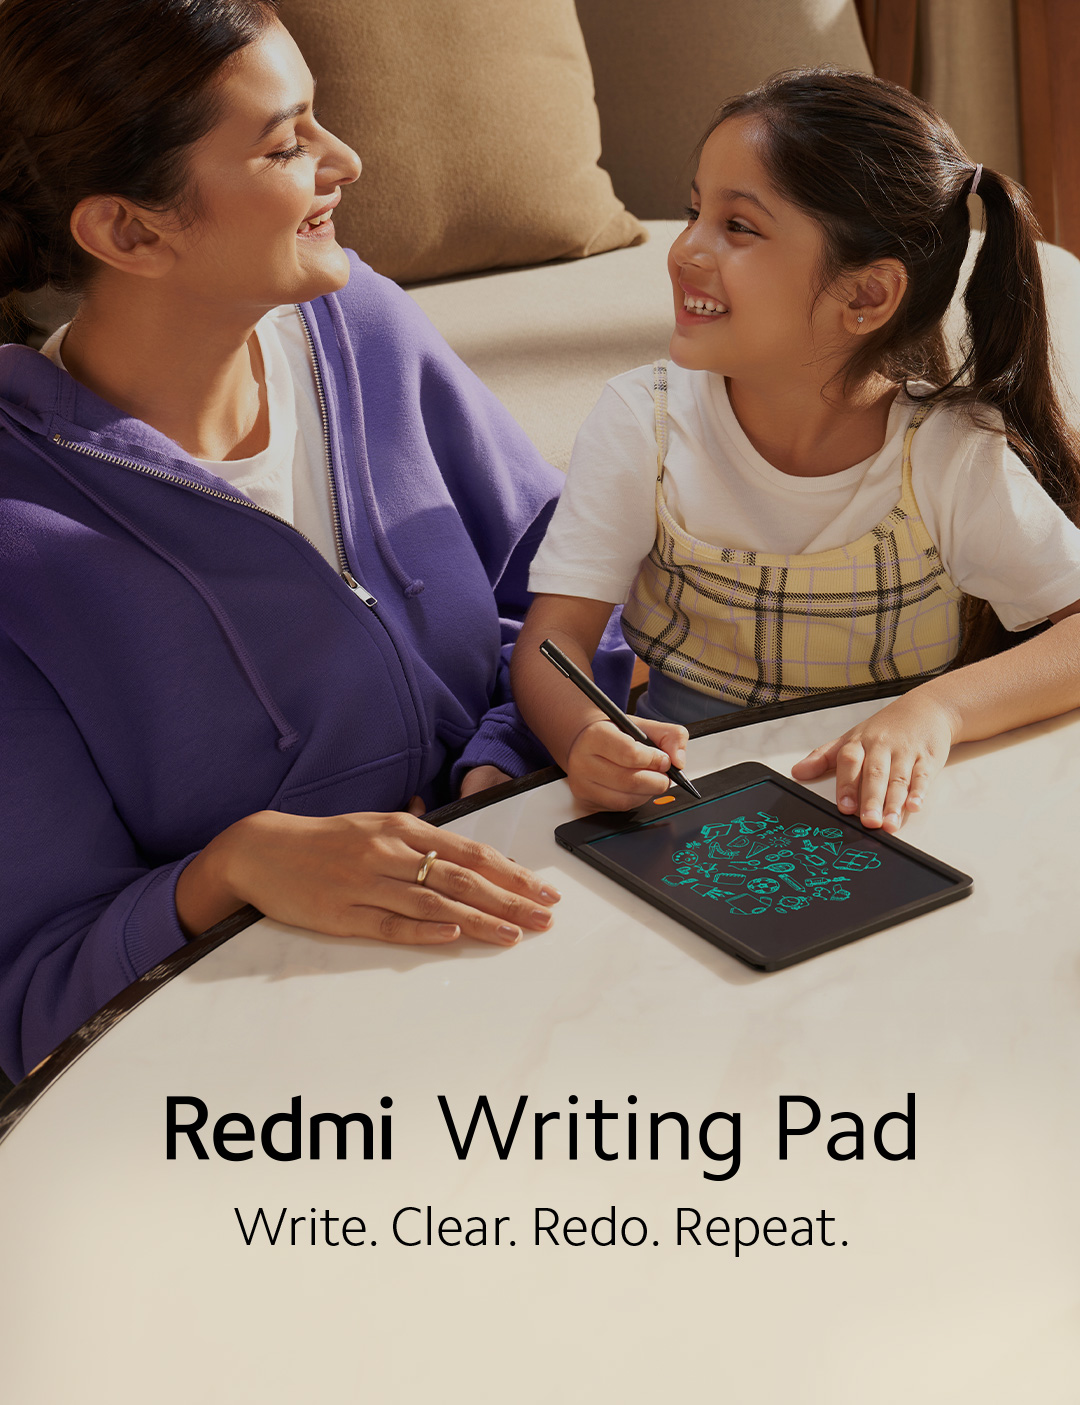 Xiaomi Mi LCD Writing Tablet 13.5 Inch - TechPunt